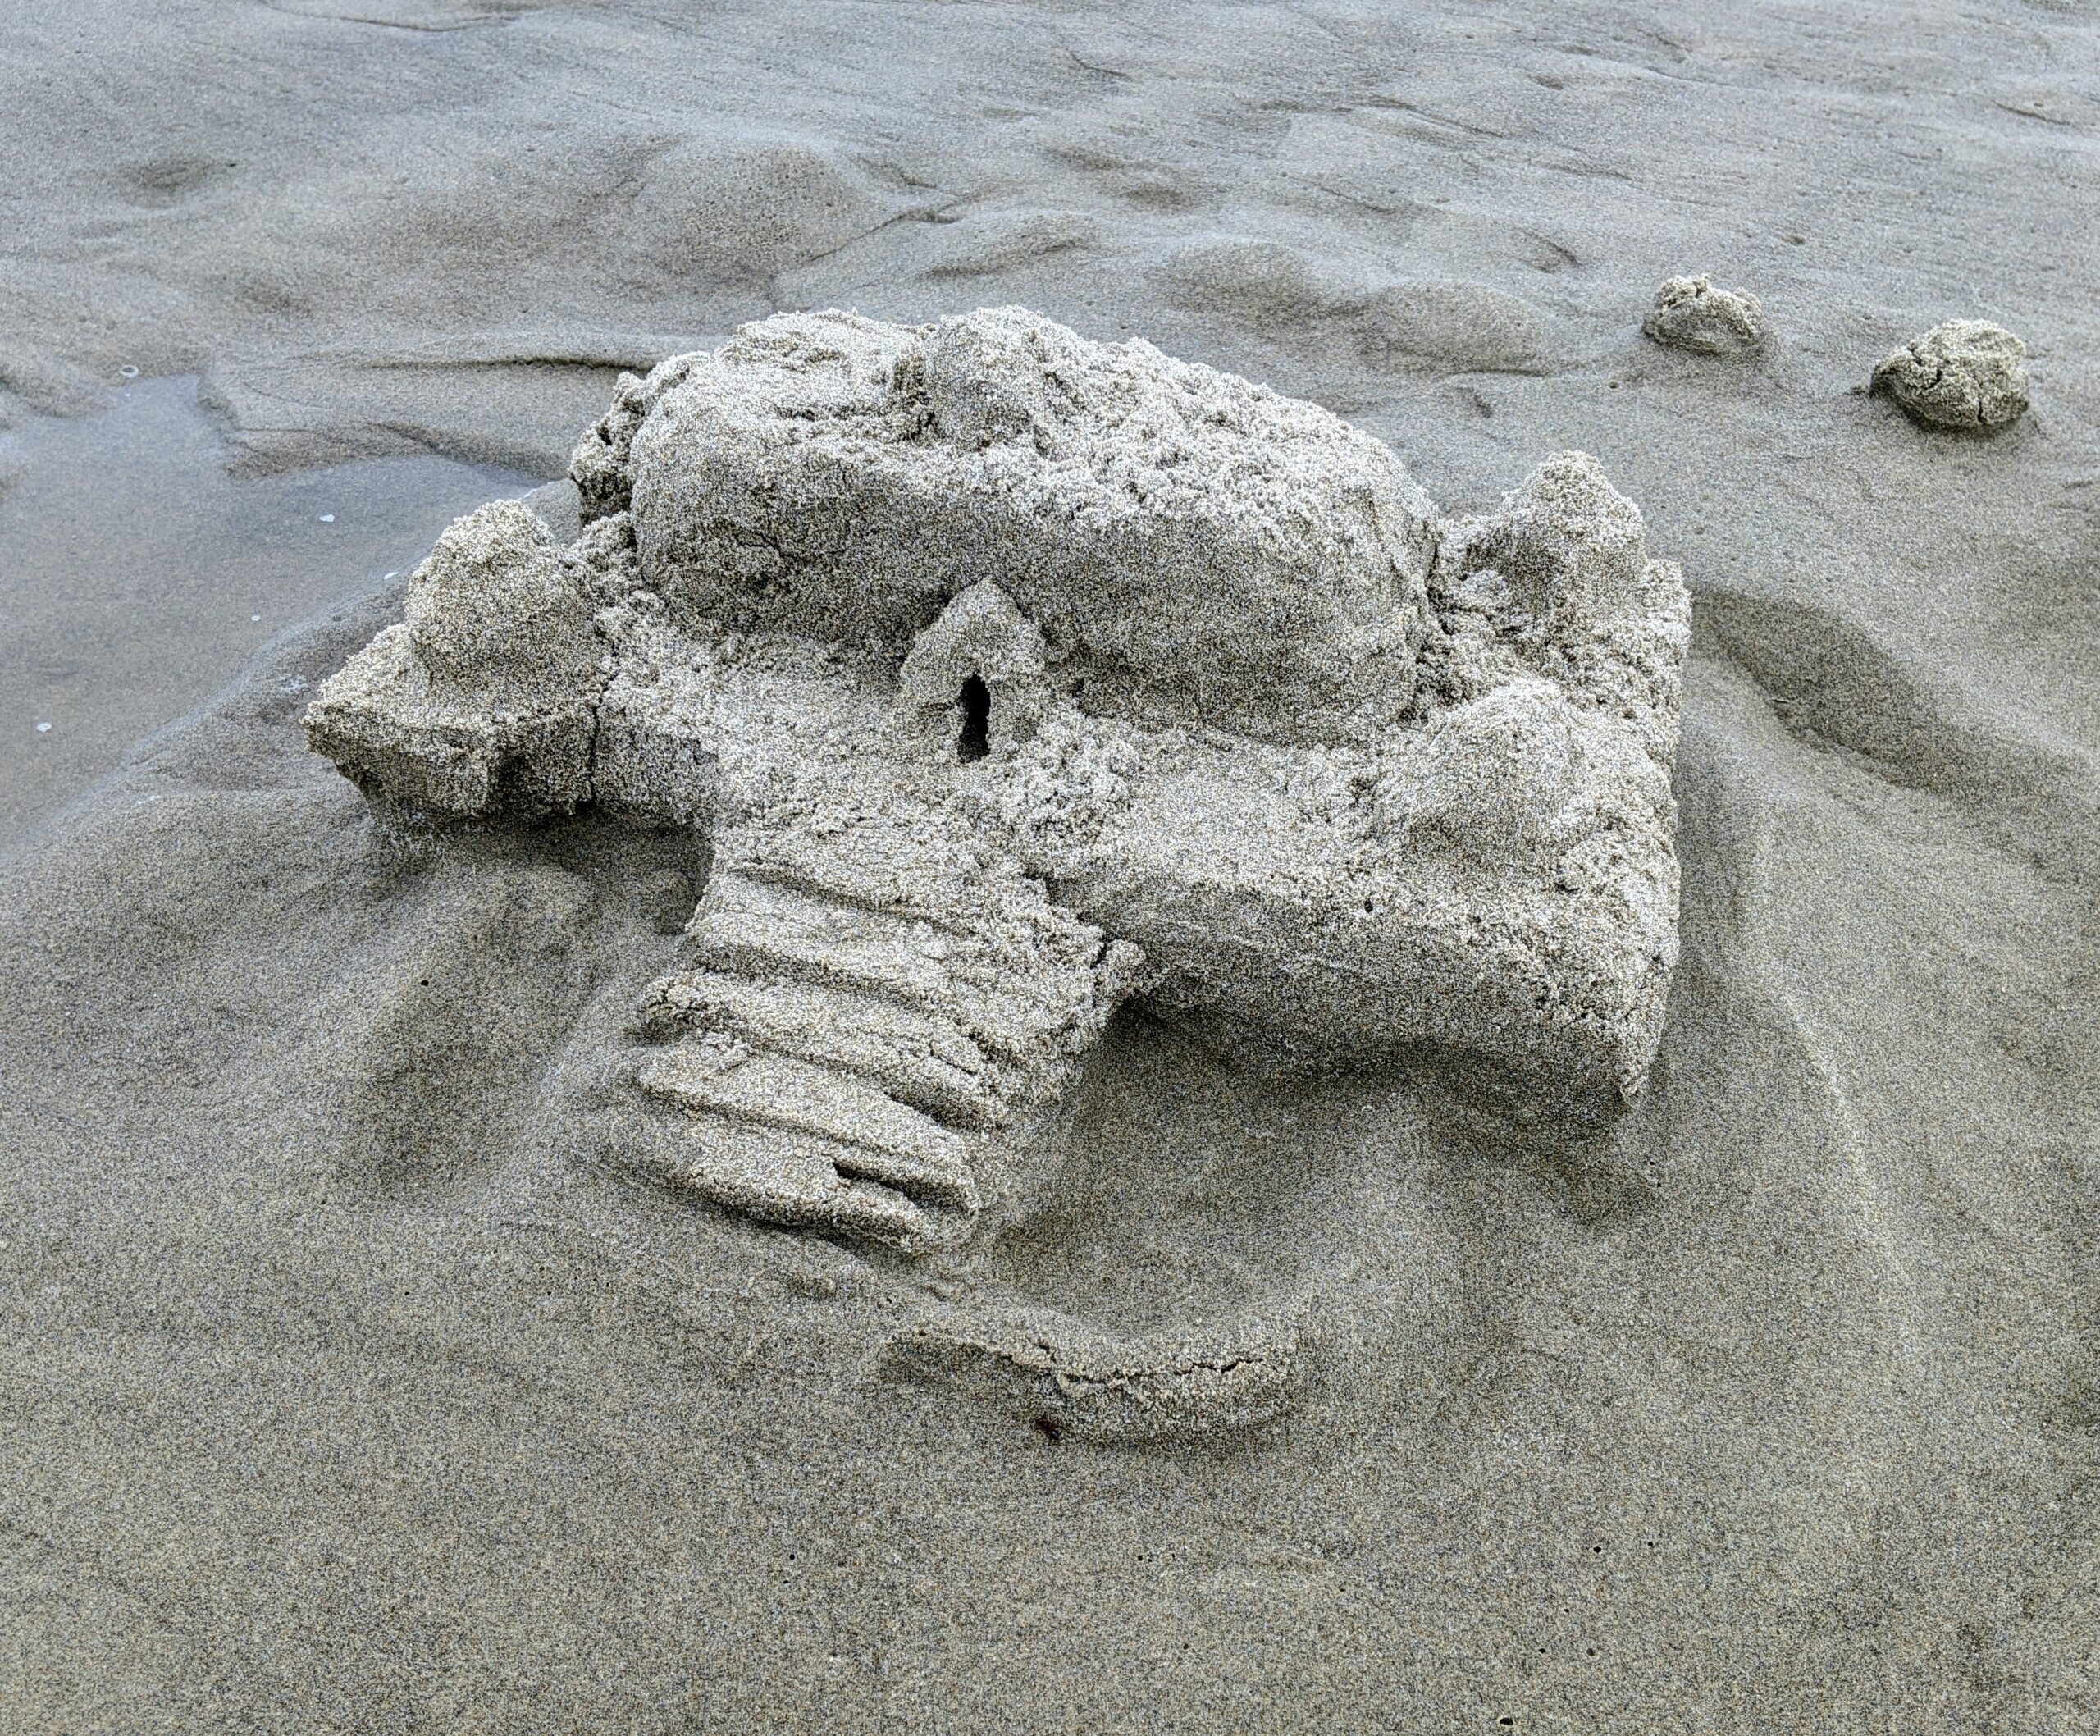 Sand Castles